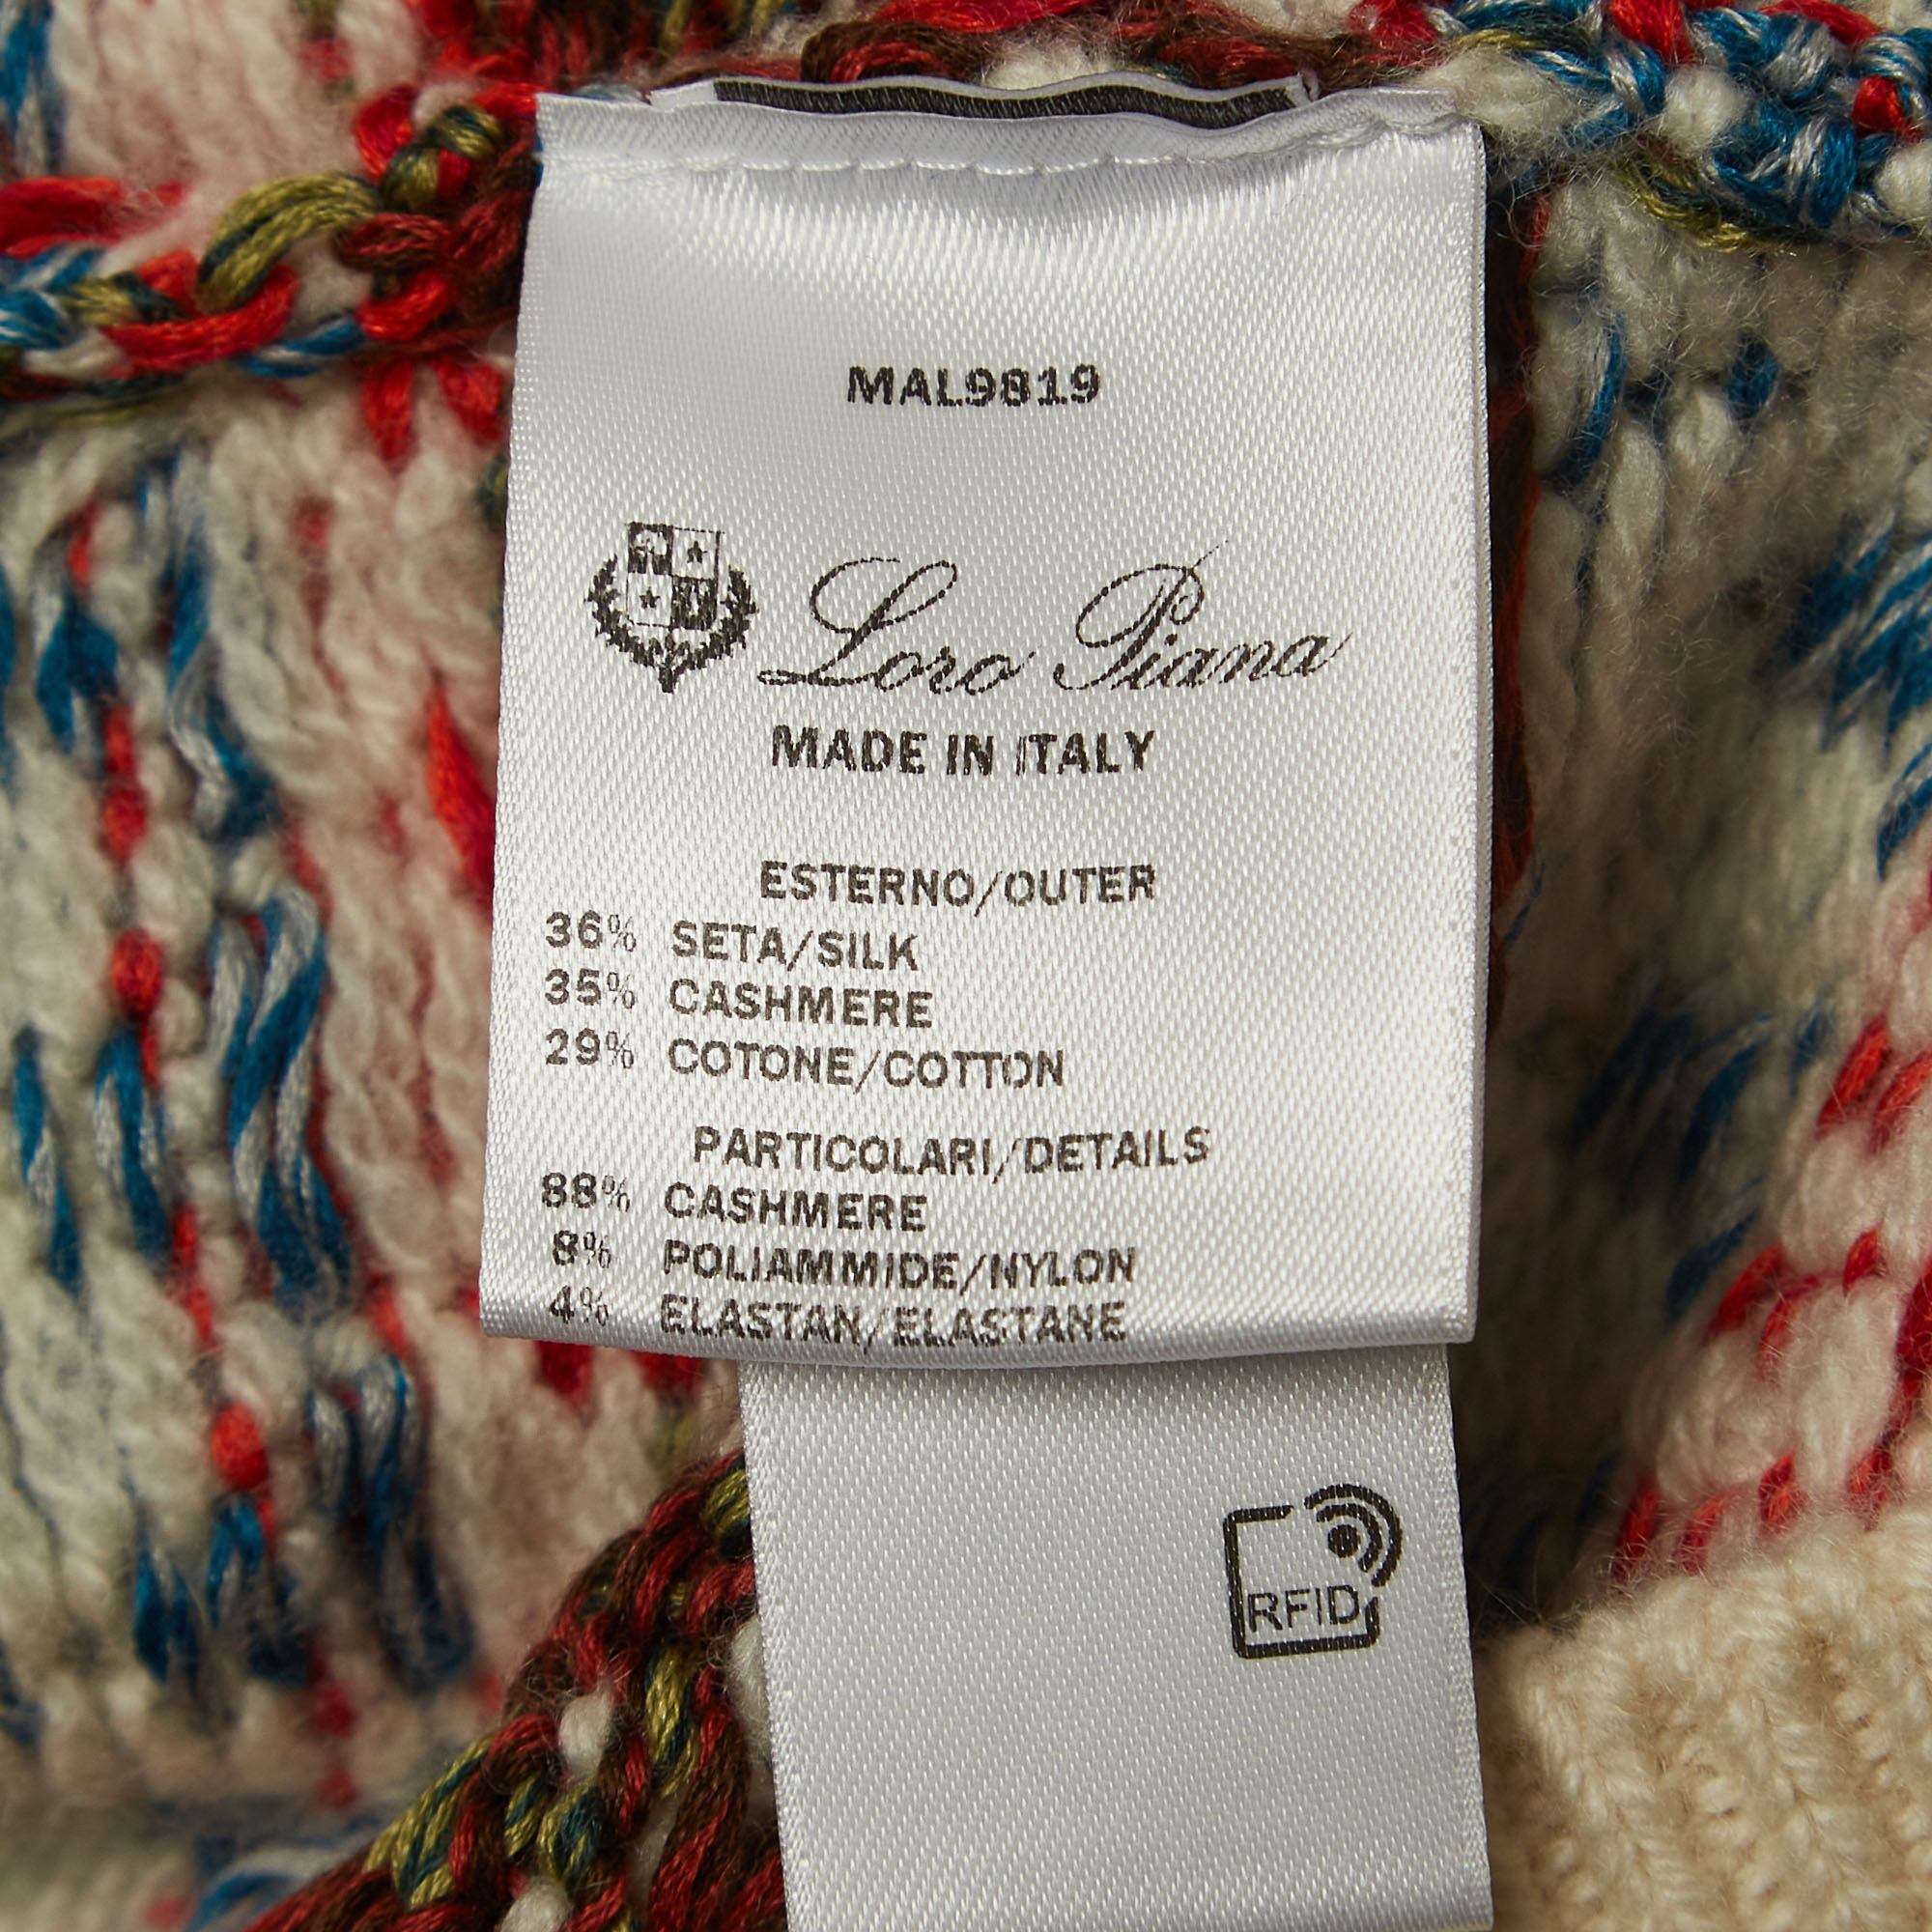 Loro Piana Multicolor Patterned Knit Trujillo Sweater S